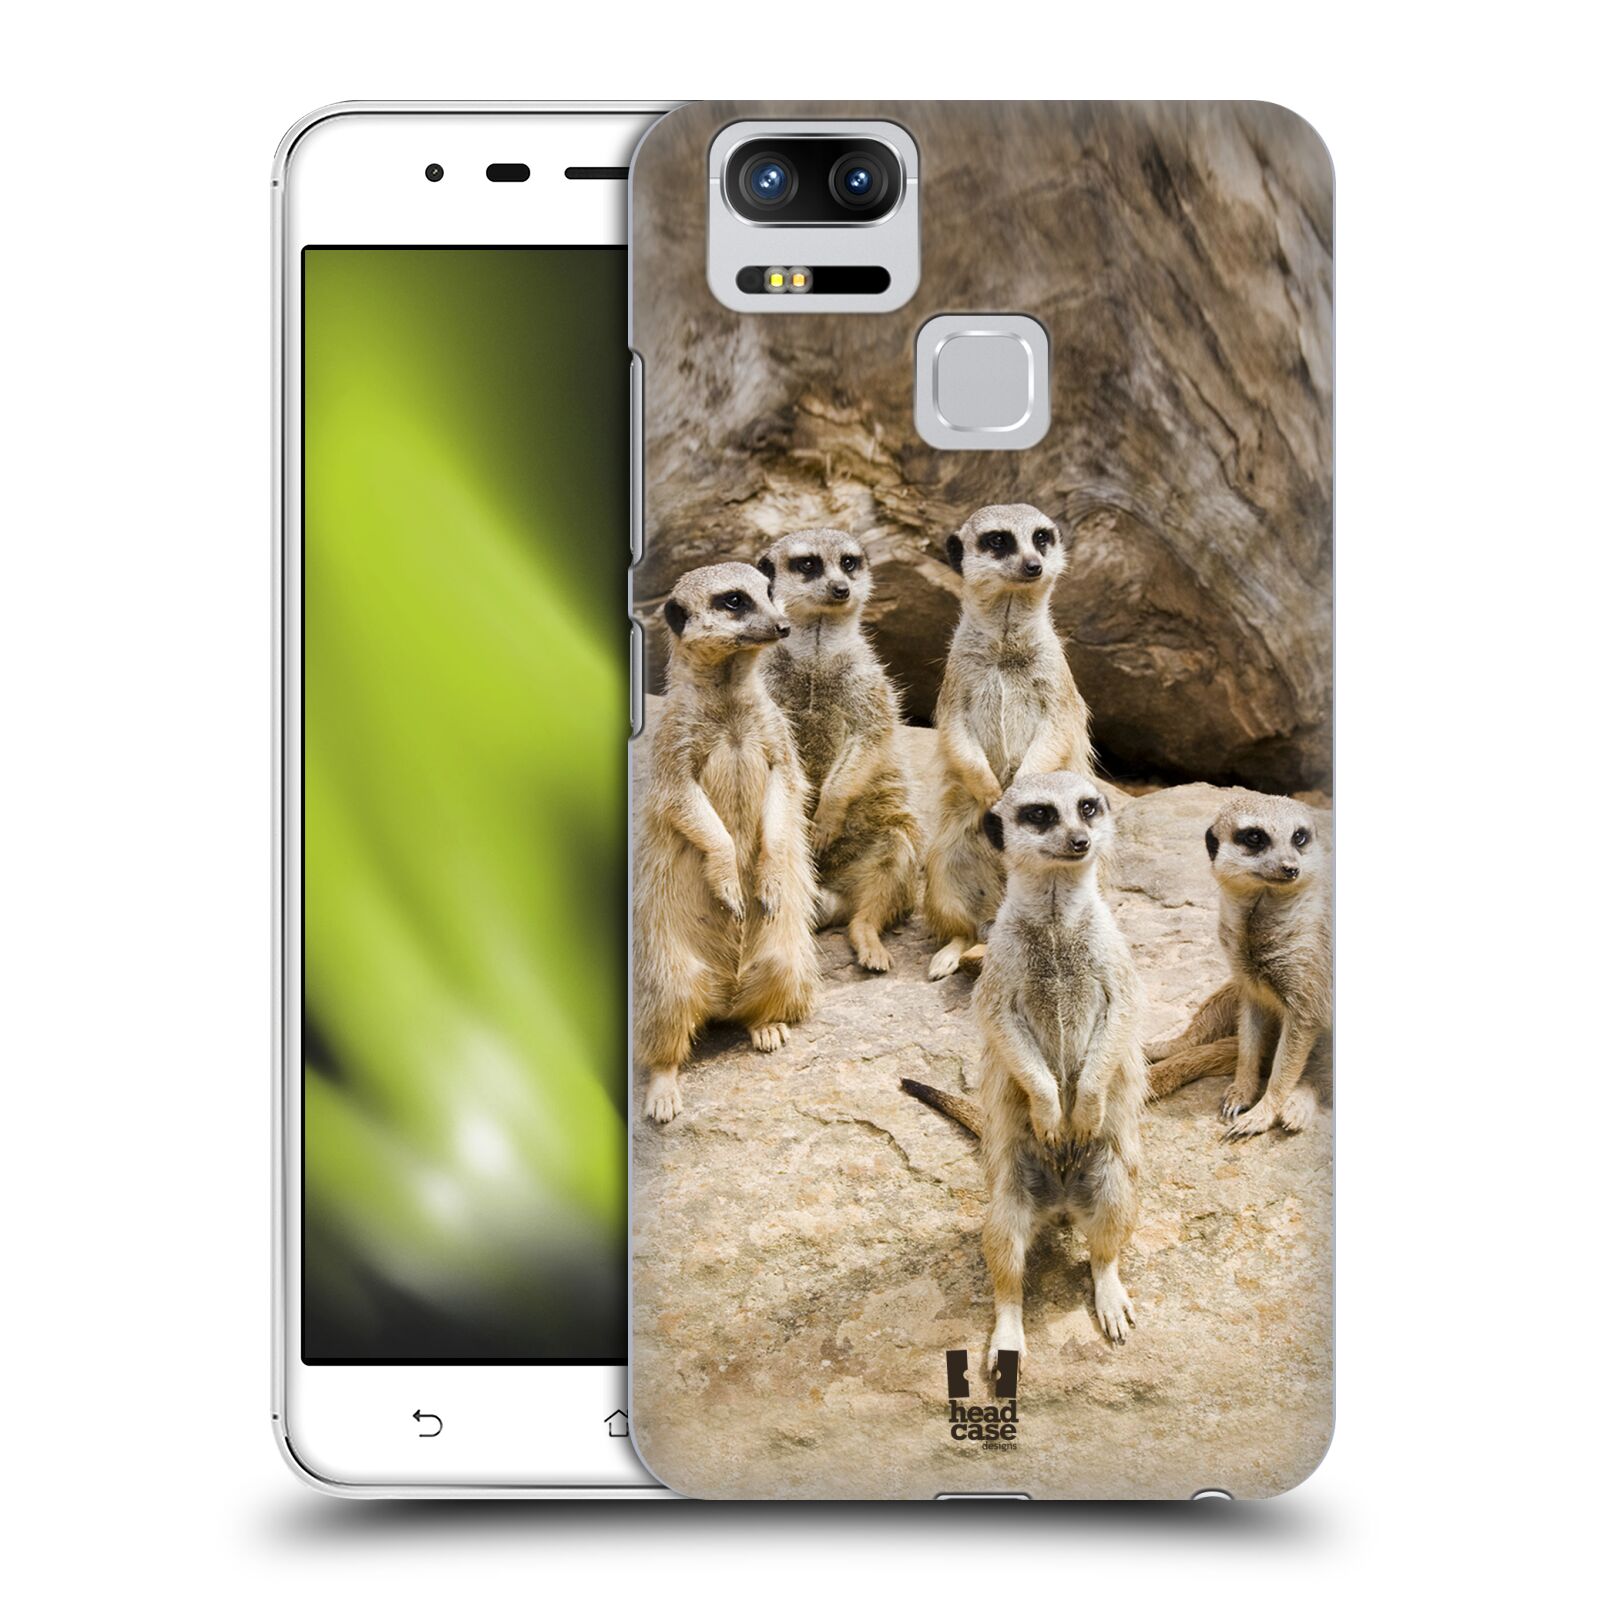 HEAD CASE plastový obal na mobil Asus Zenfone 3 Zoom ZE553KL vzor Divočina, Divoký život a zvířata foto SURIKATA